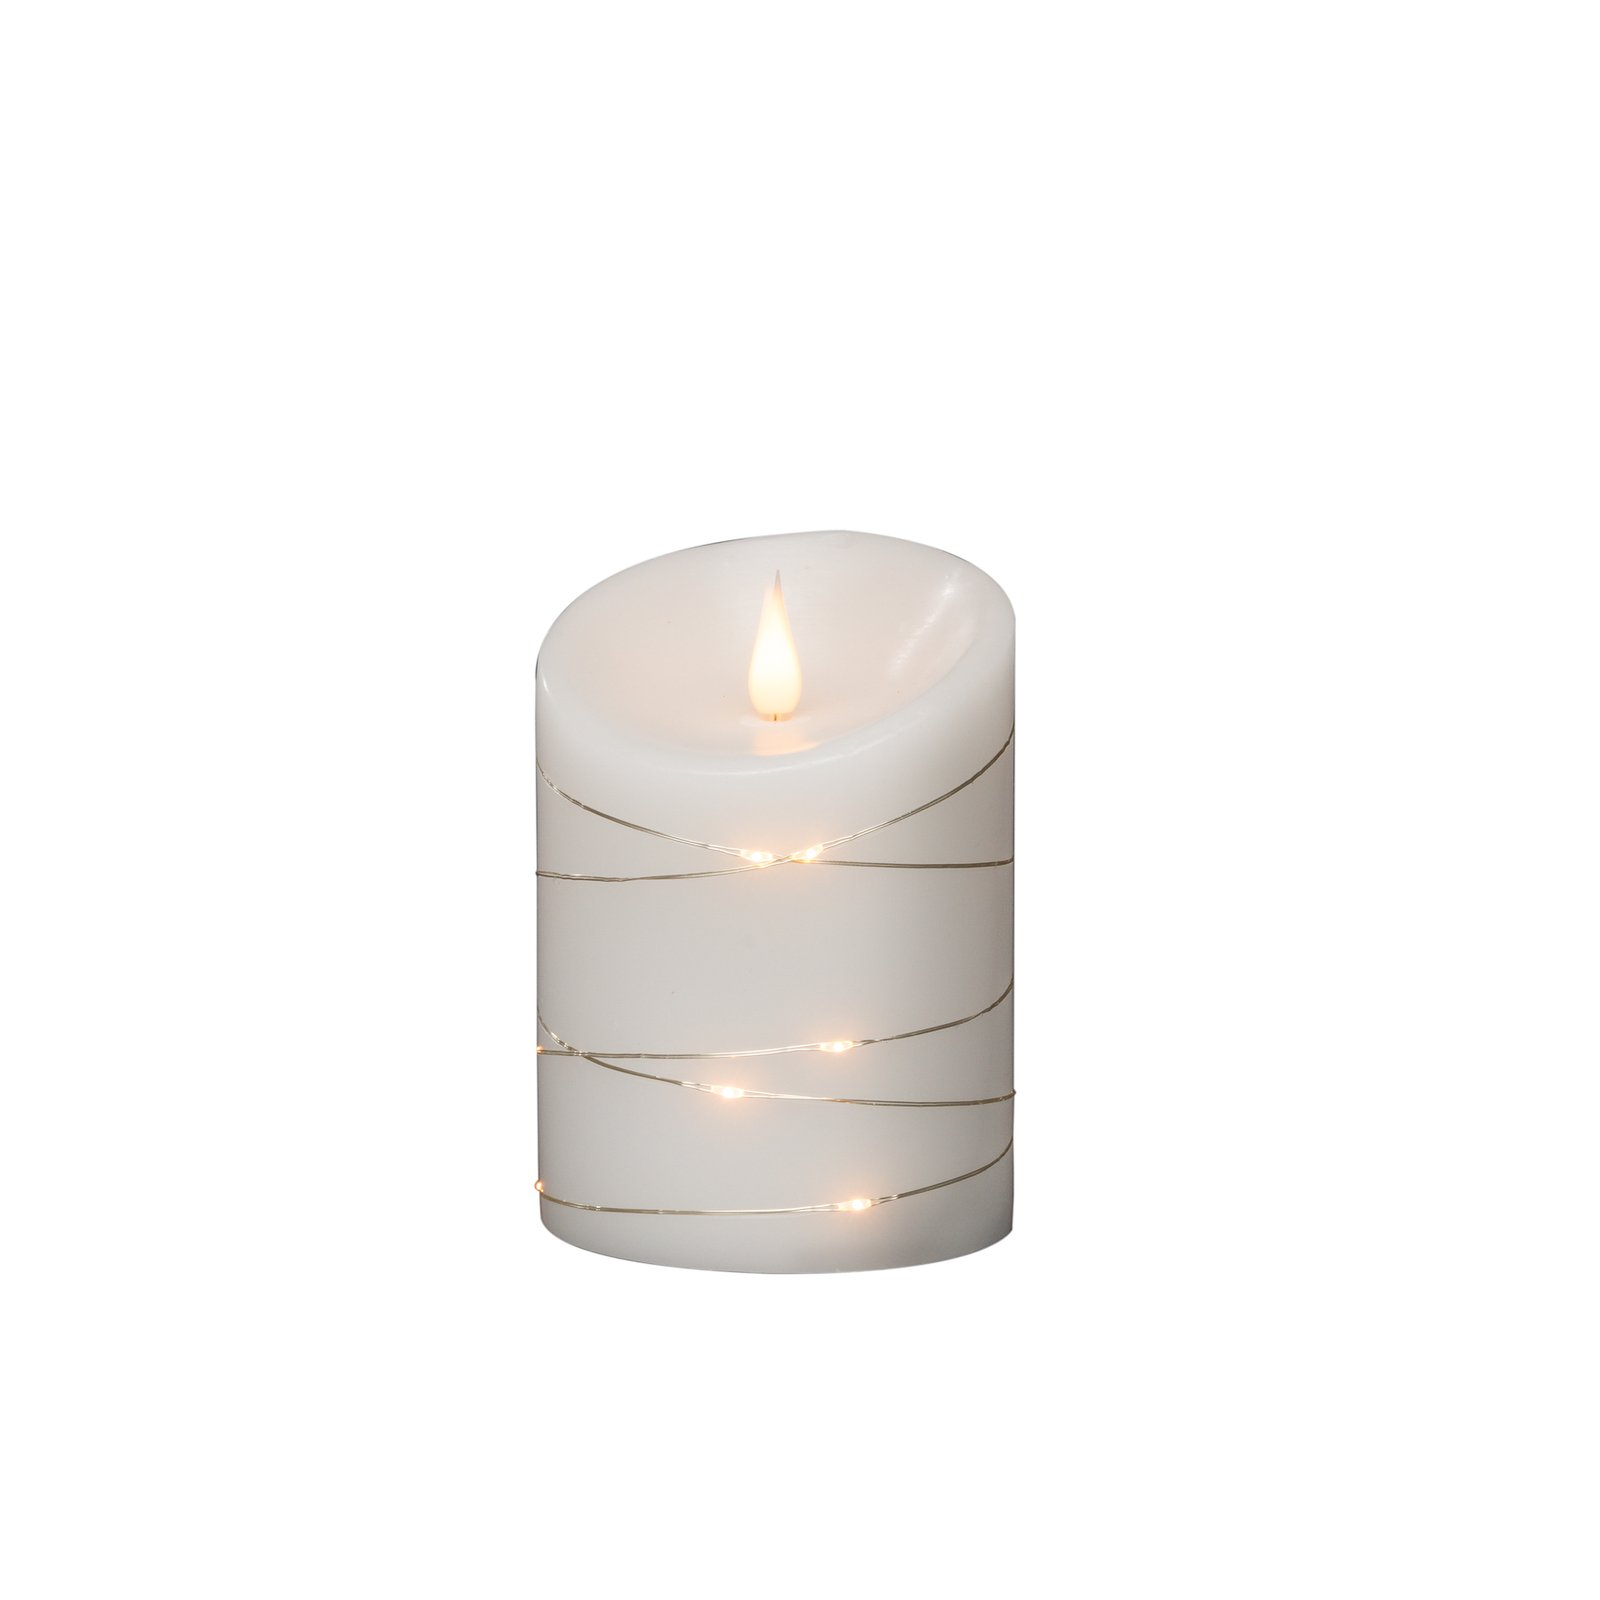 LED vosková svíčka bílá Barva světla teplá bílá 14 cm